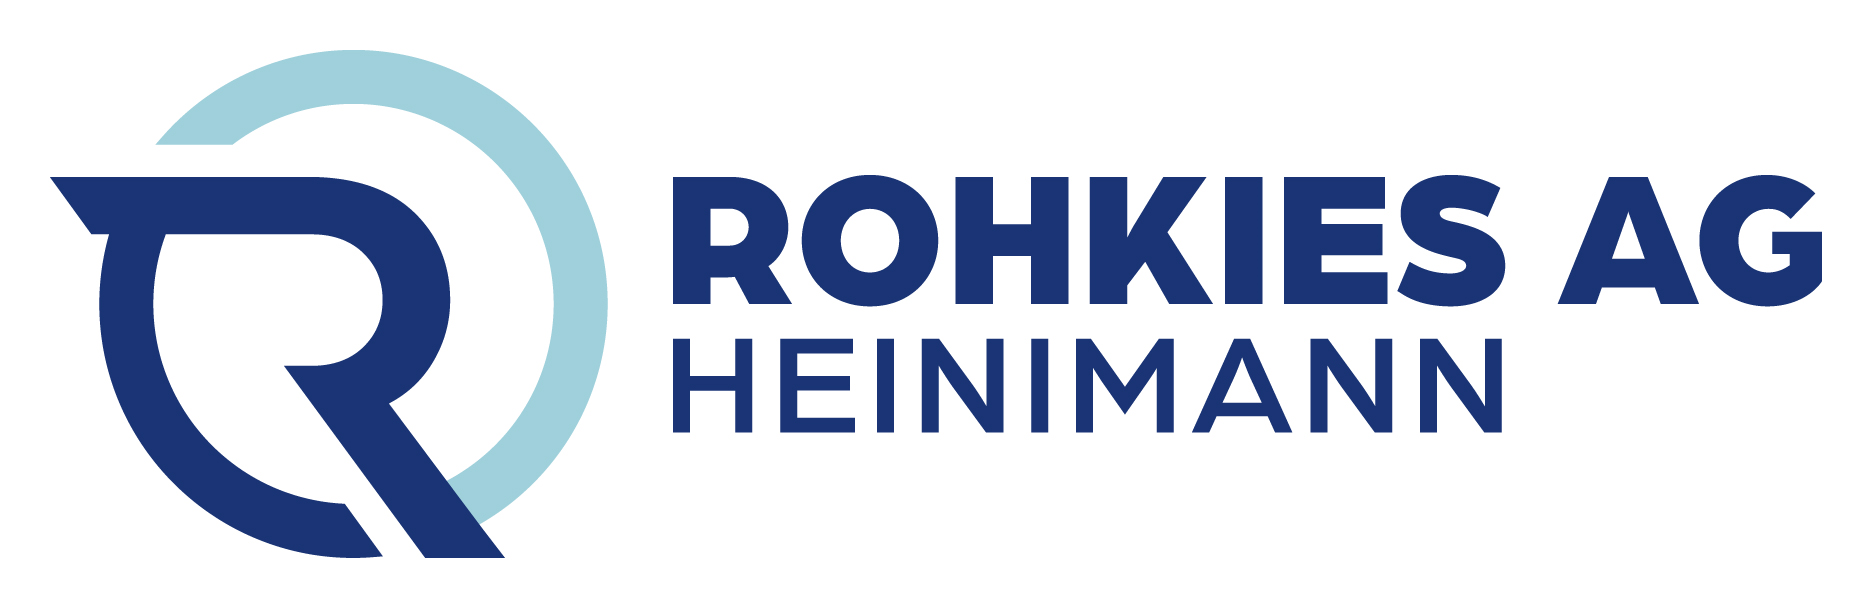 Rohkies Heinimann AG